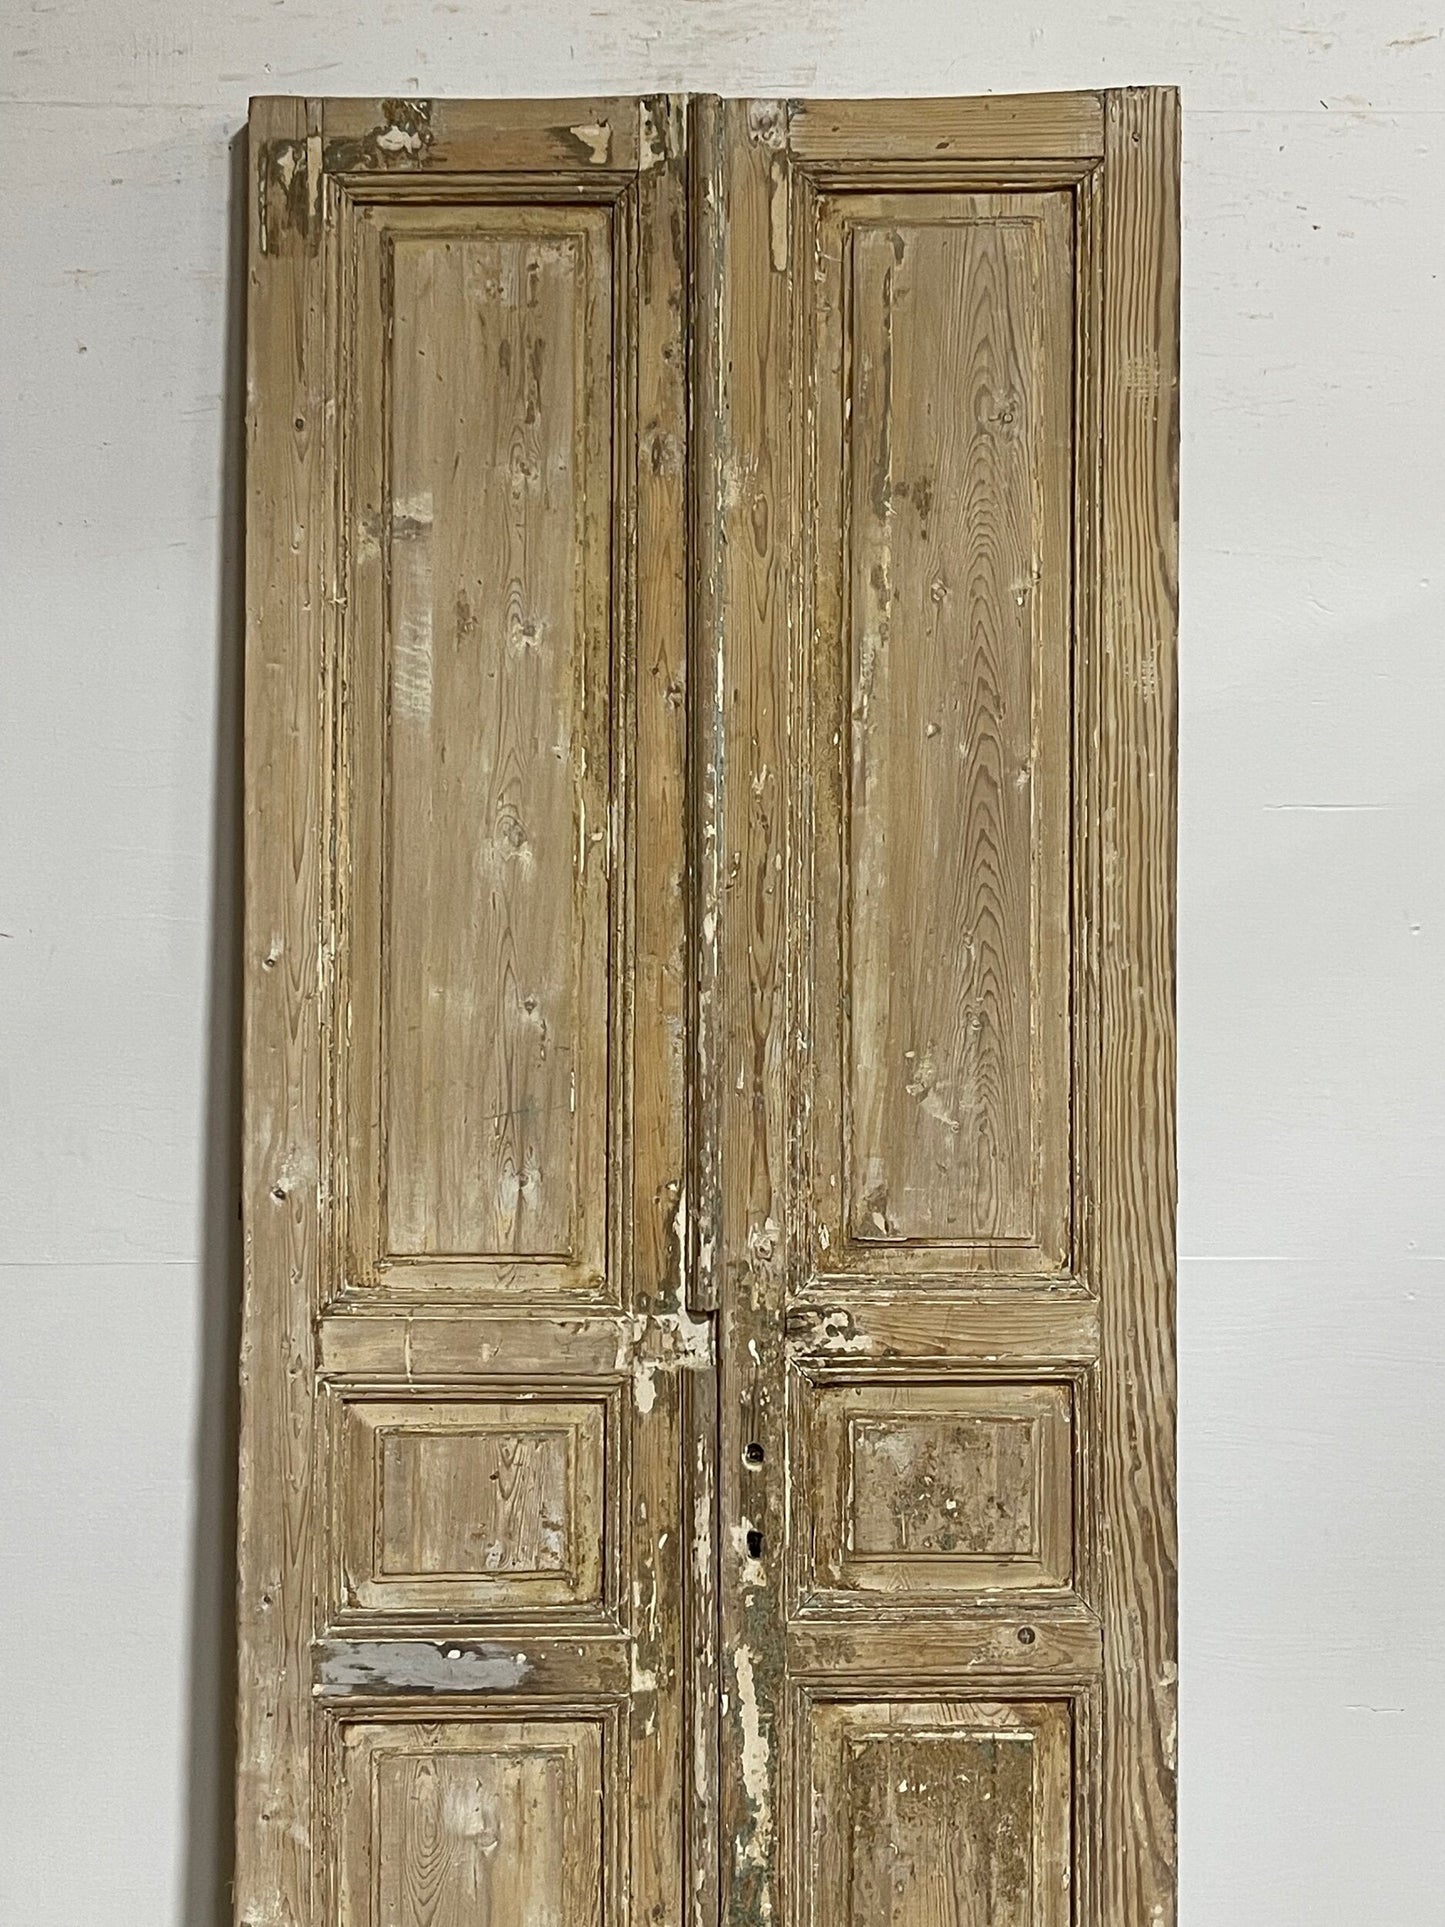 Antique French doors (96x38) H0129s